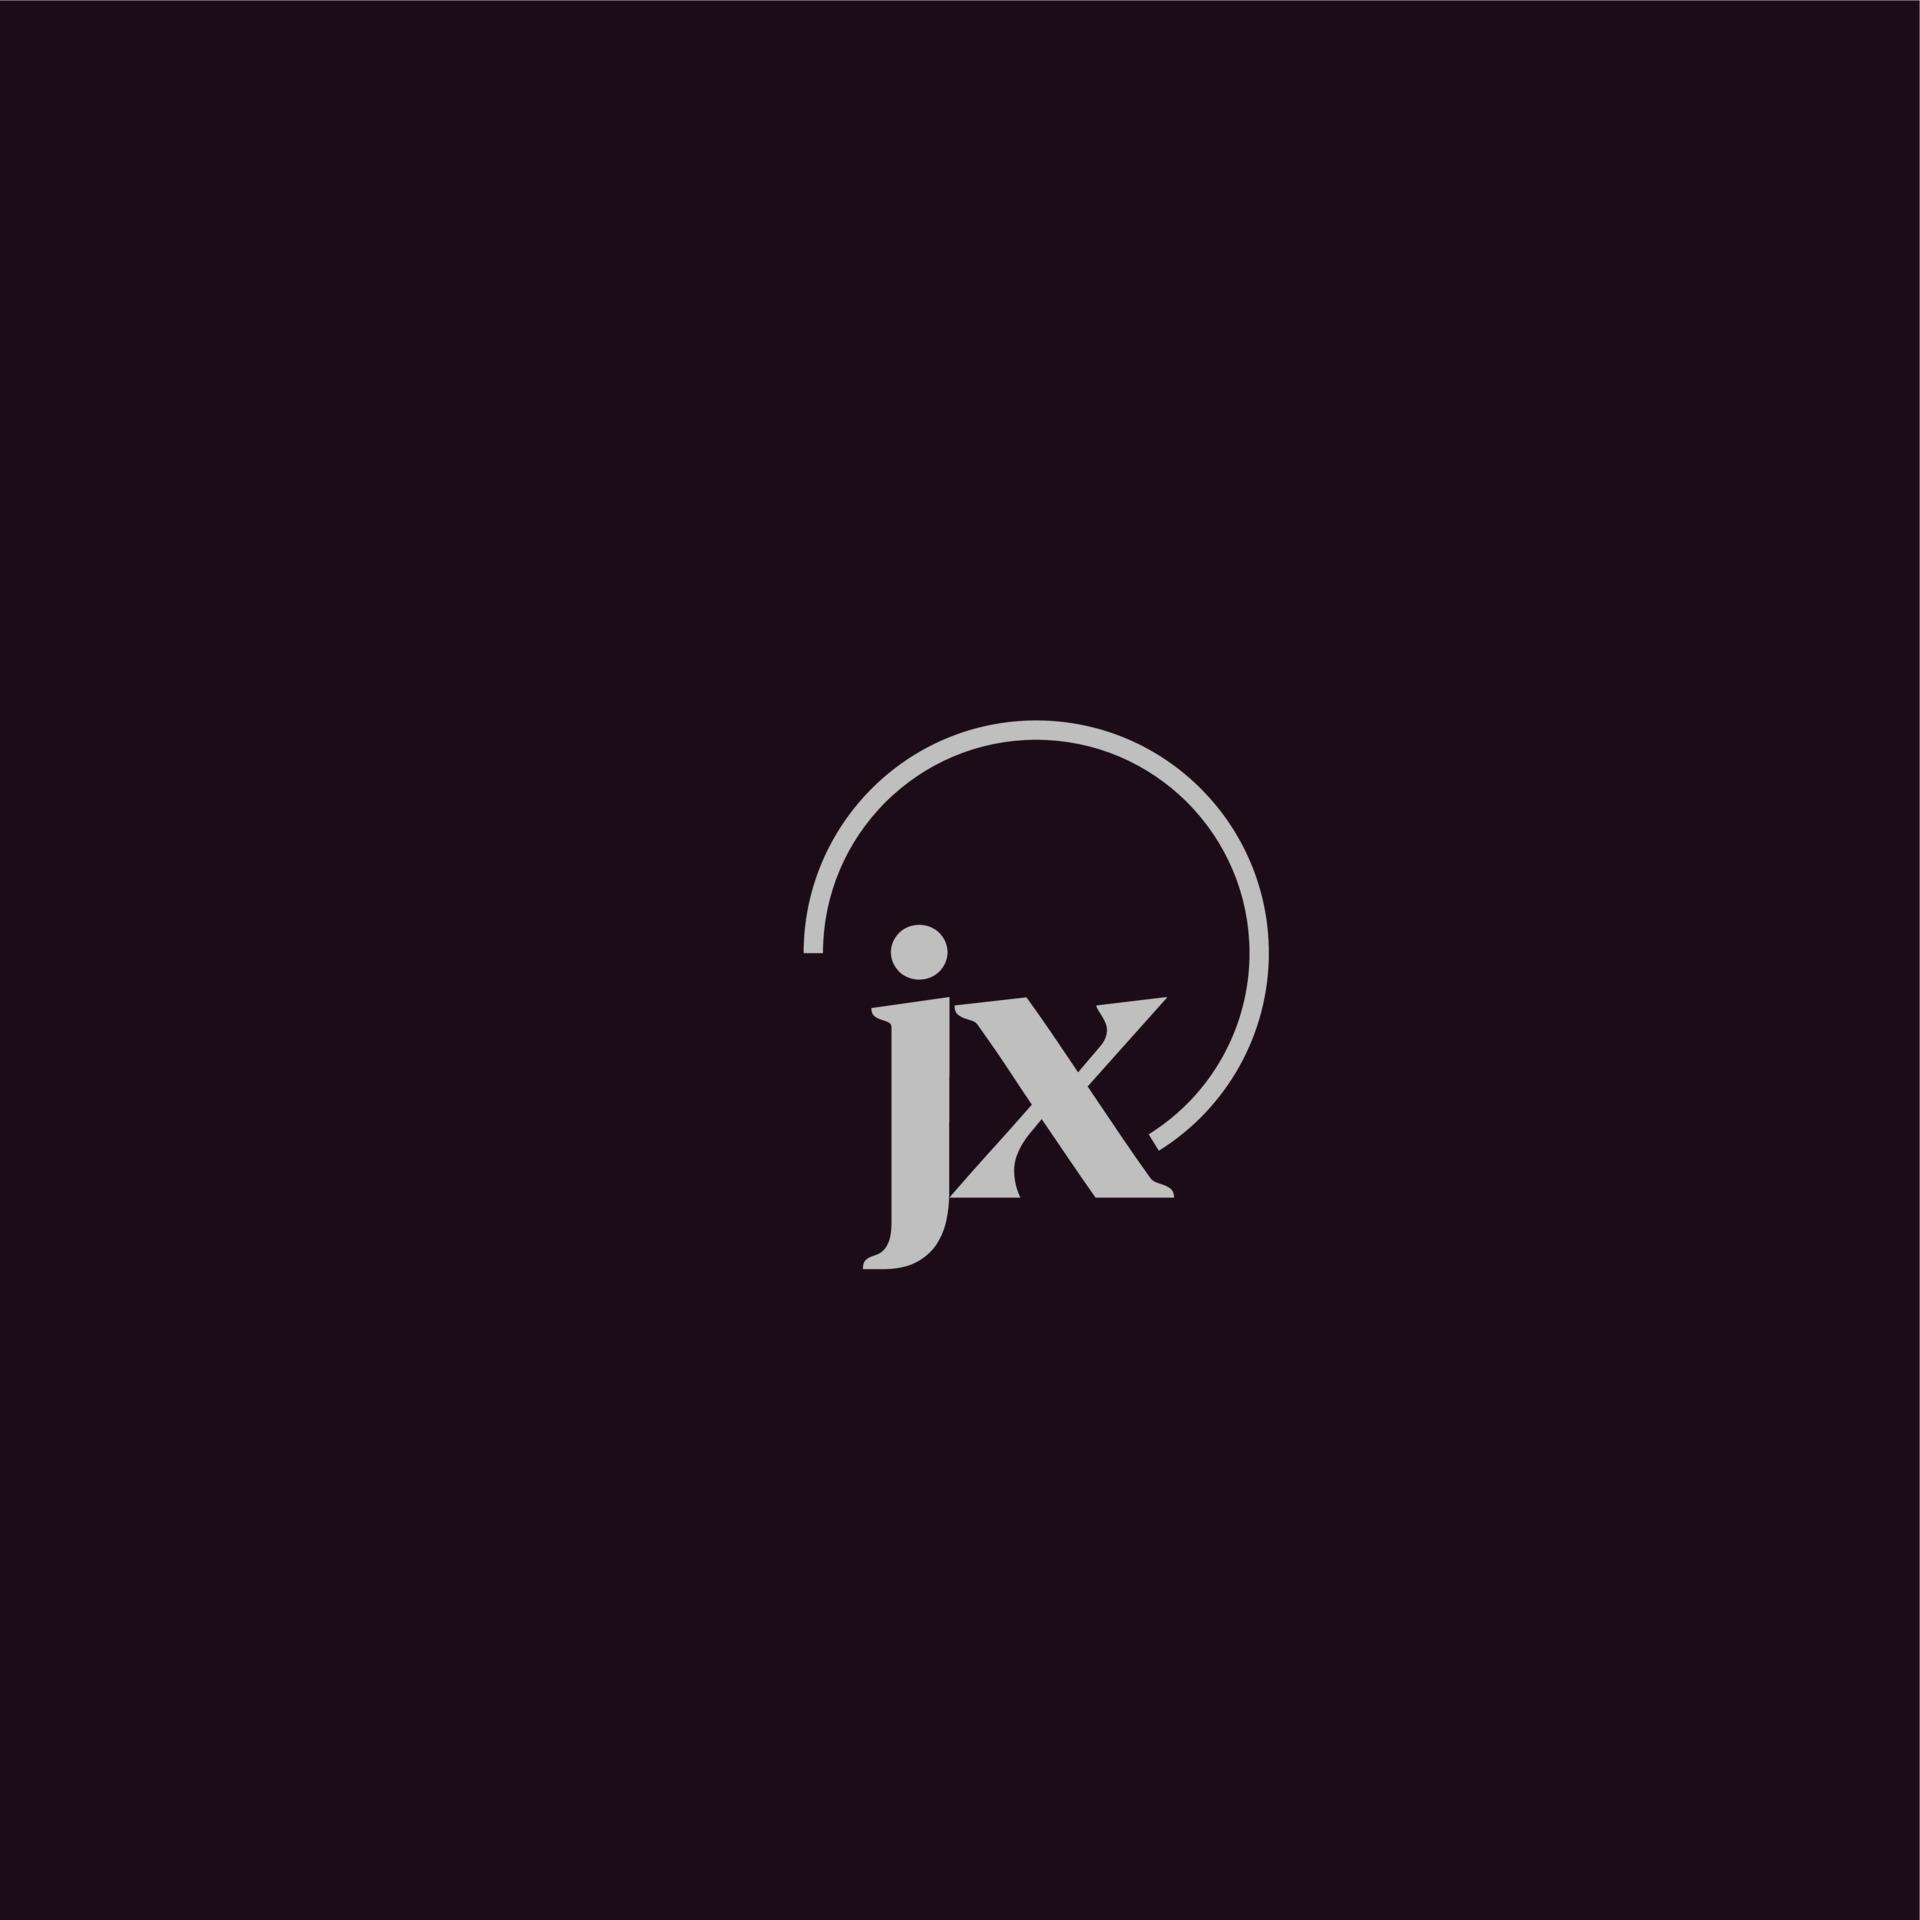 Monogram JX Logo Design Graphic by Greenlines Studios · Creative Fabrica